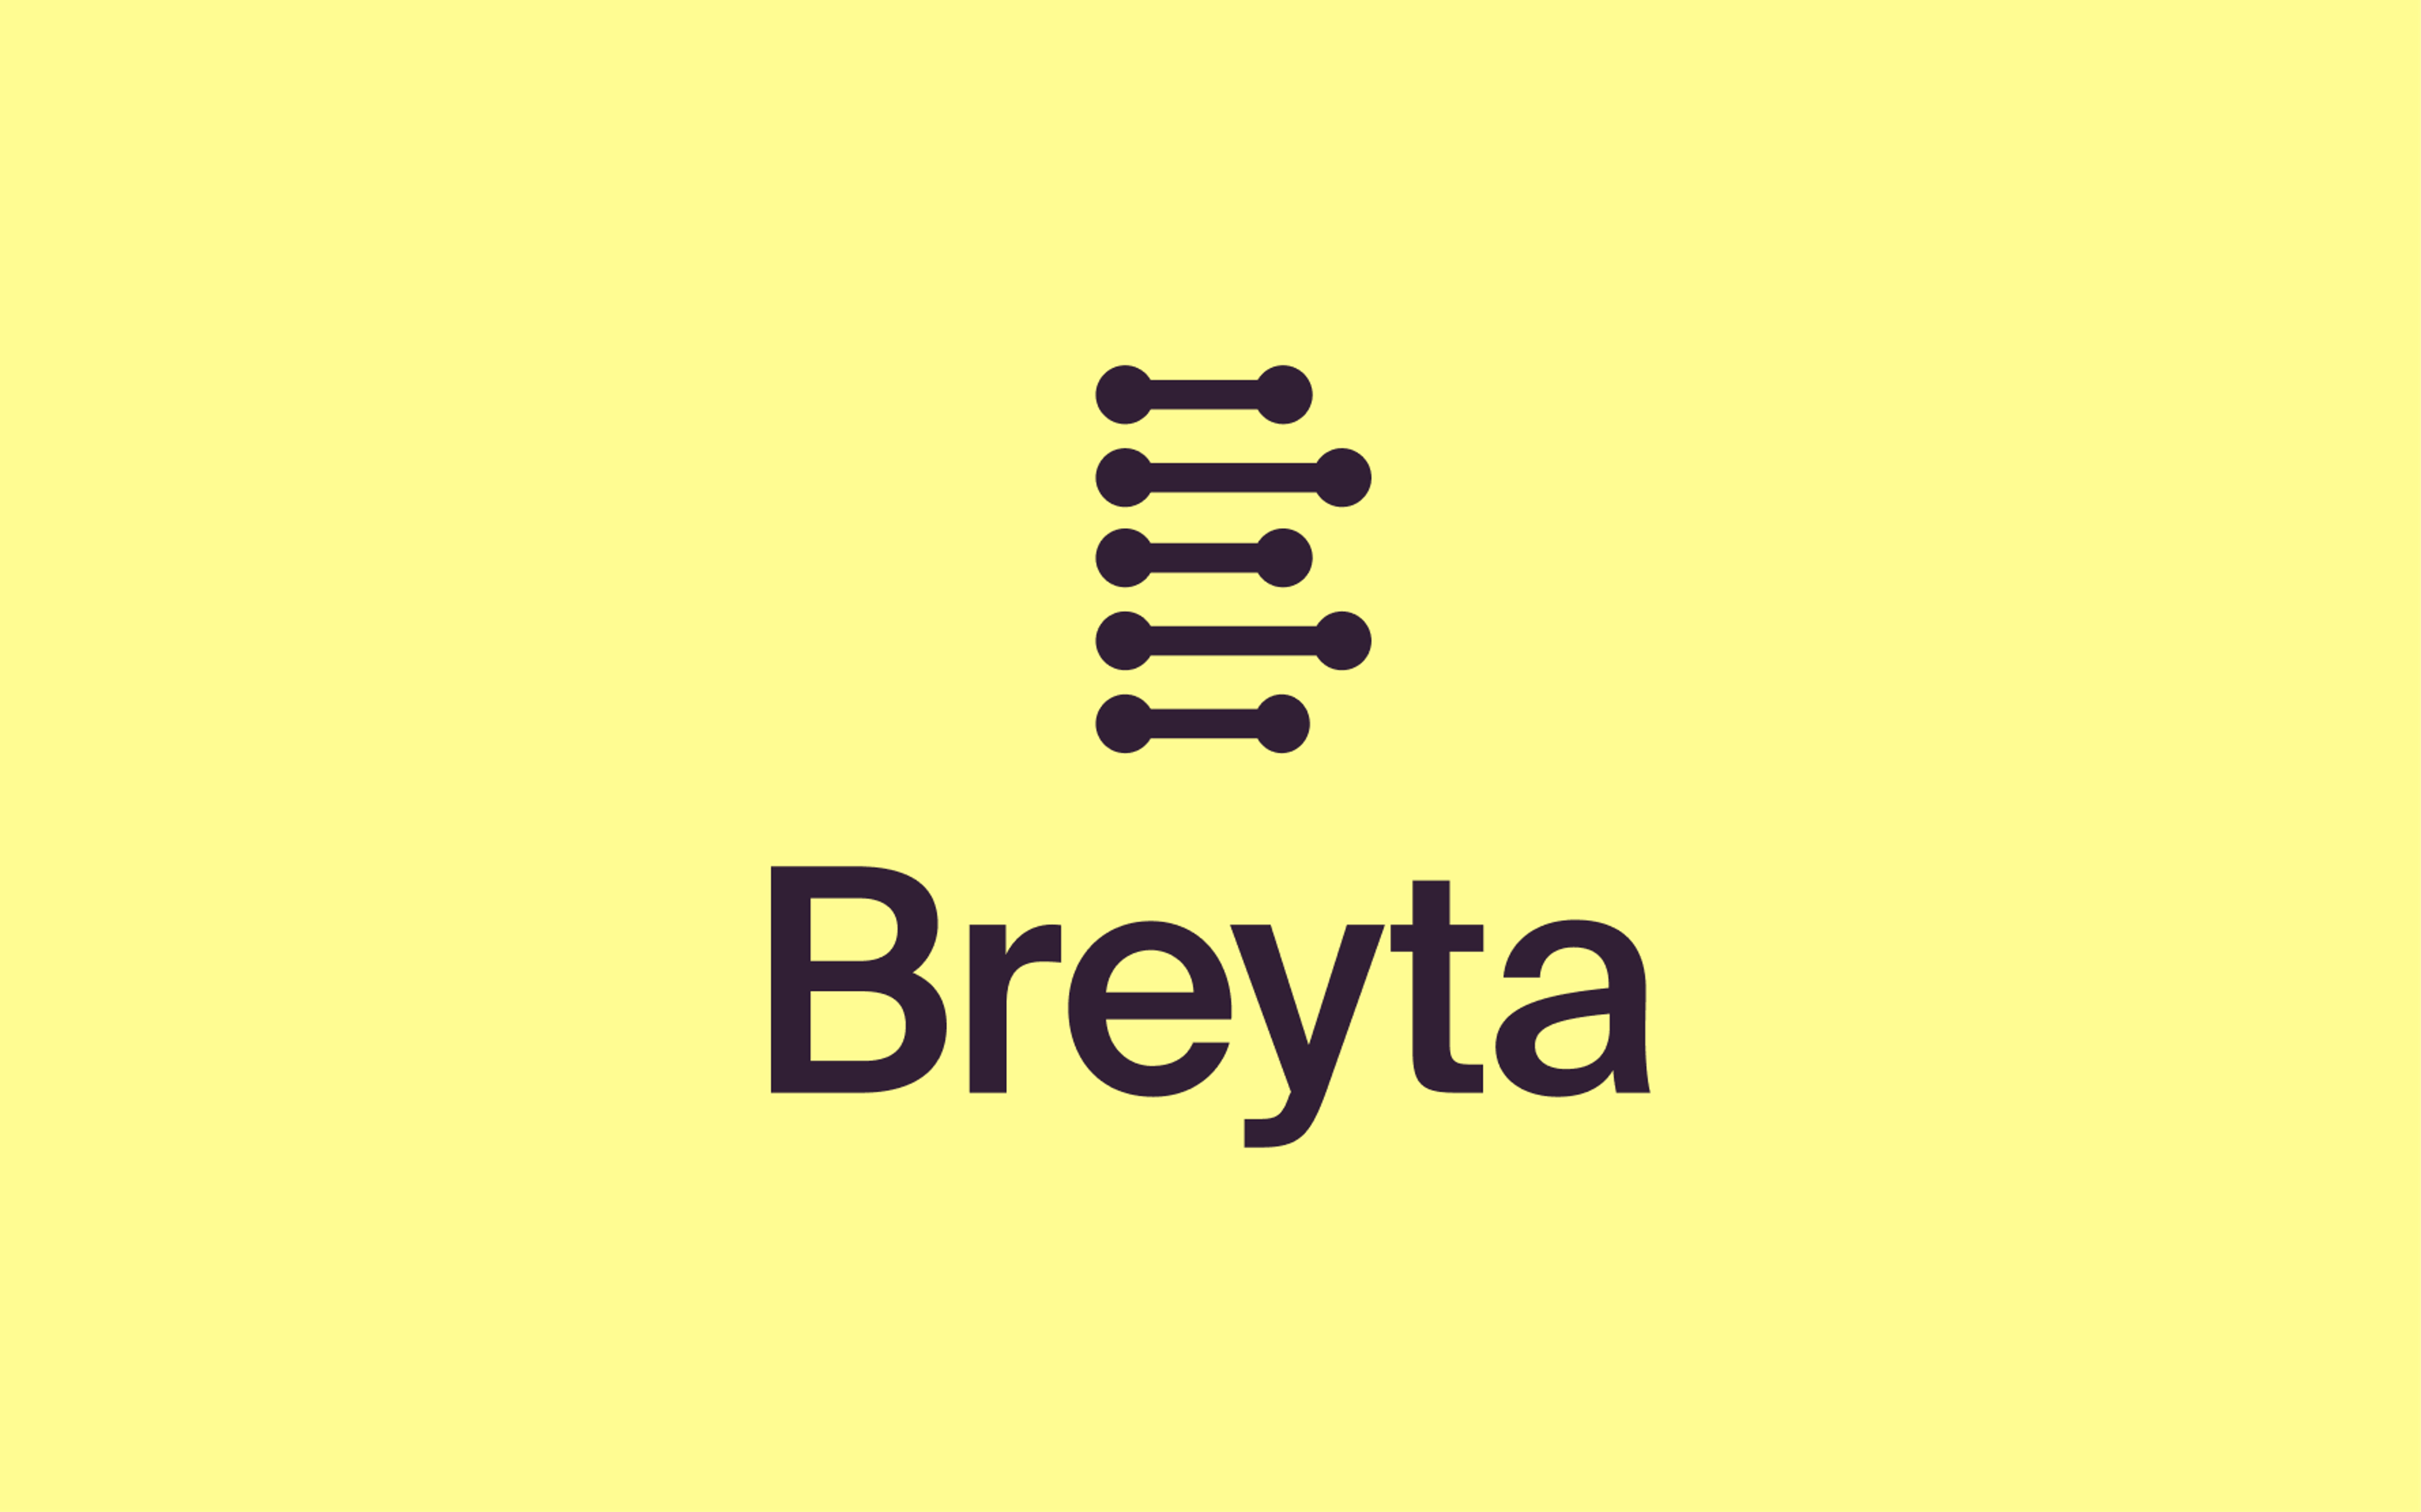 Breyta logo on yellow